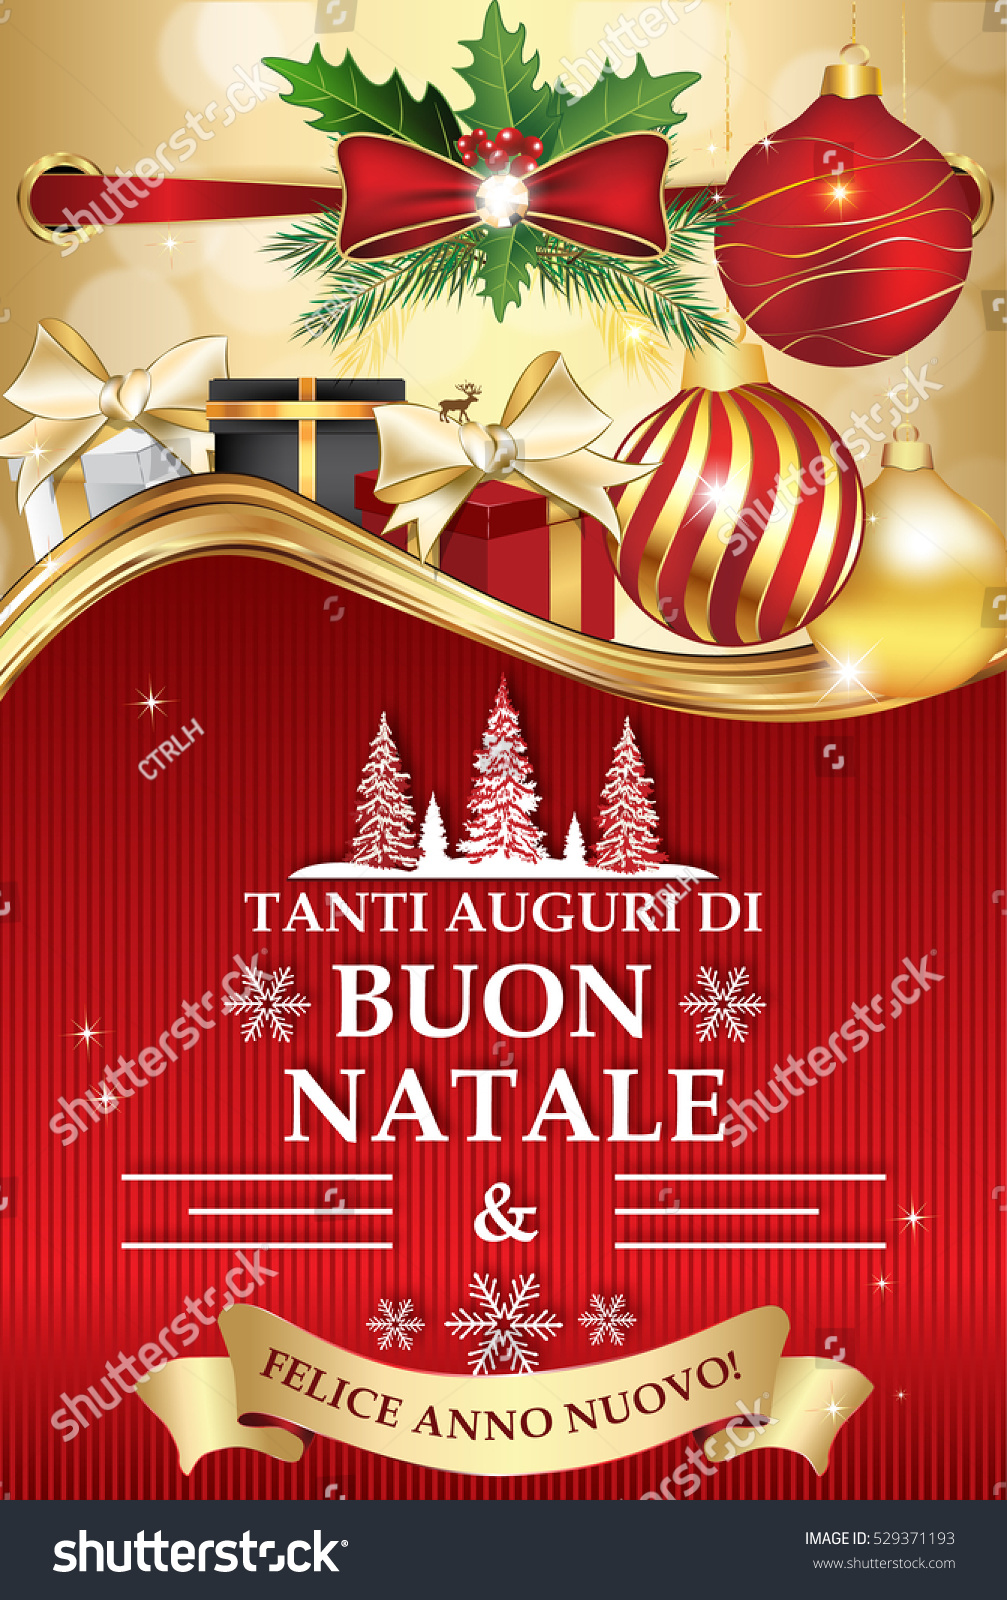 Buon Natale Greetings Italian.Italian Greeting Card Winter Holiday Merry Stock Illustration 529371193